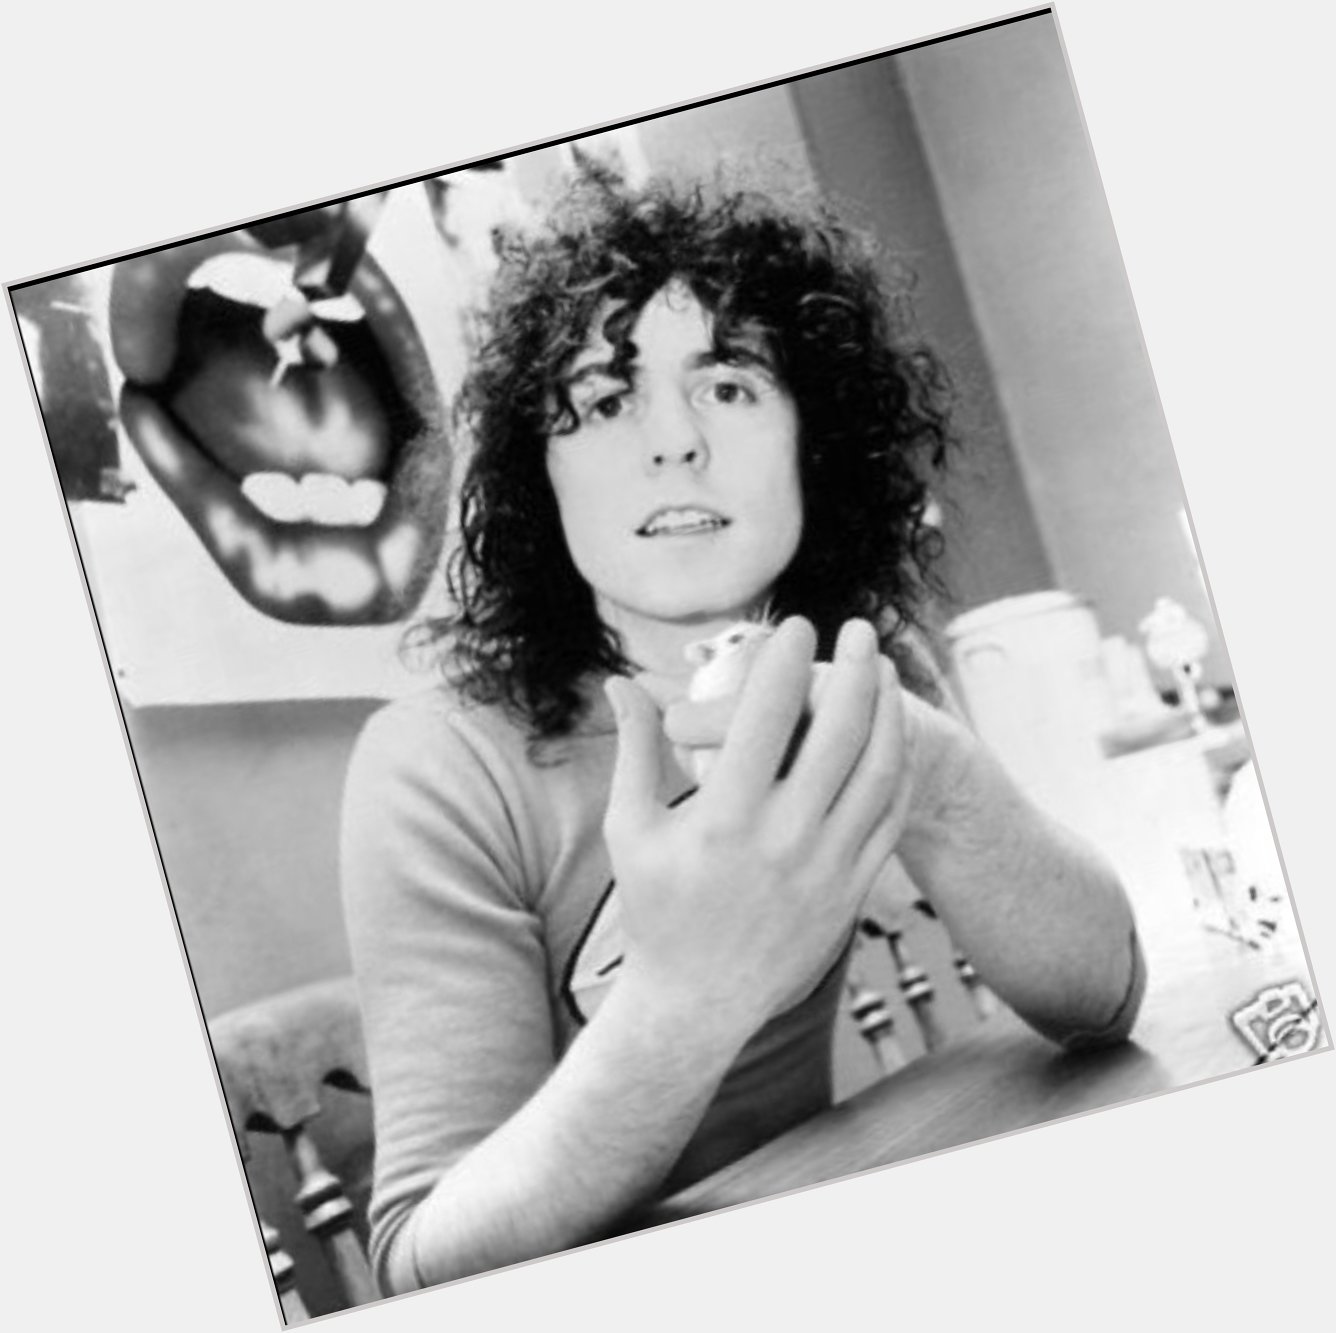 Happy Birthday, Marc Bolan! RIP 